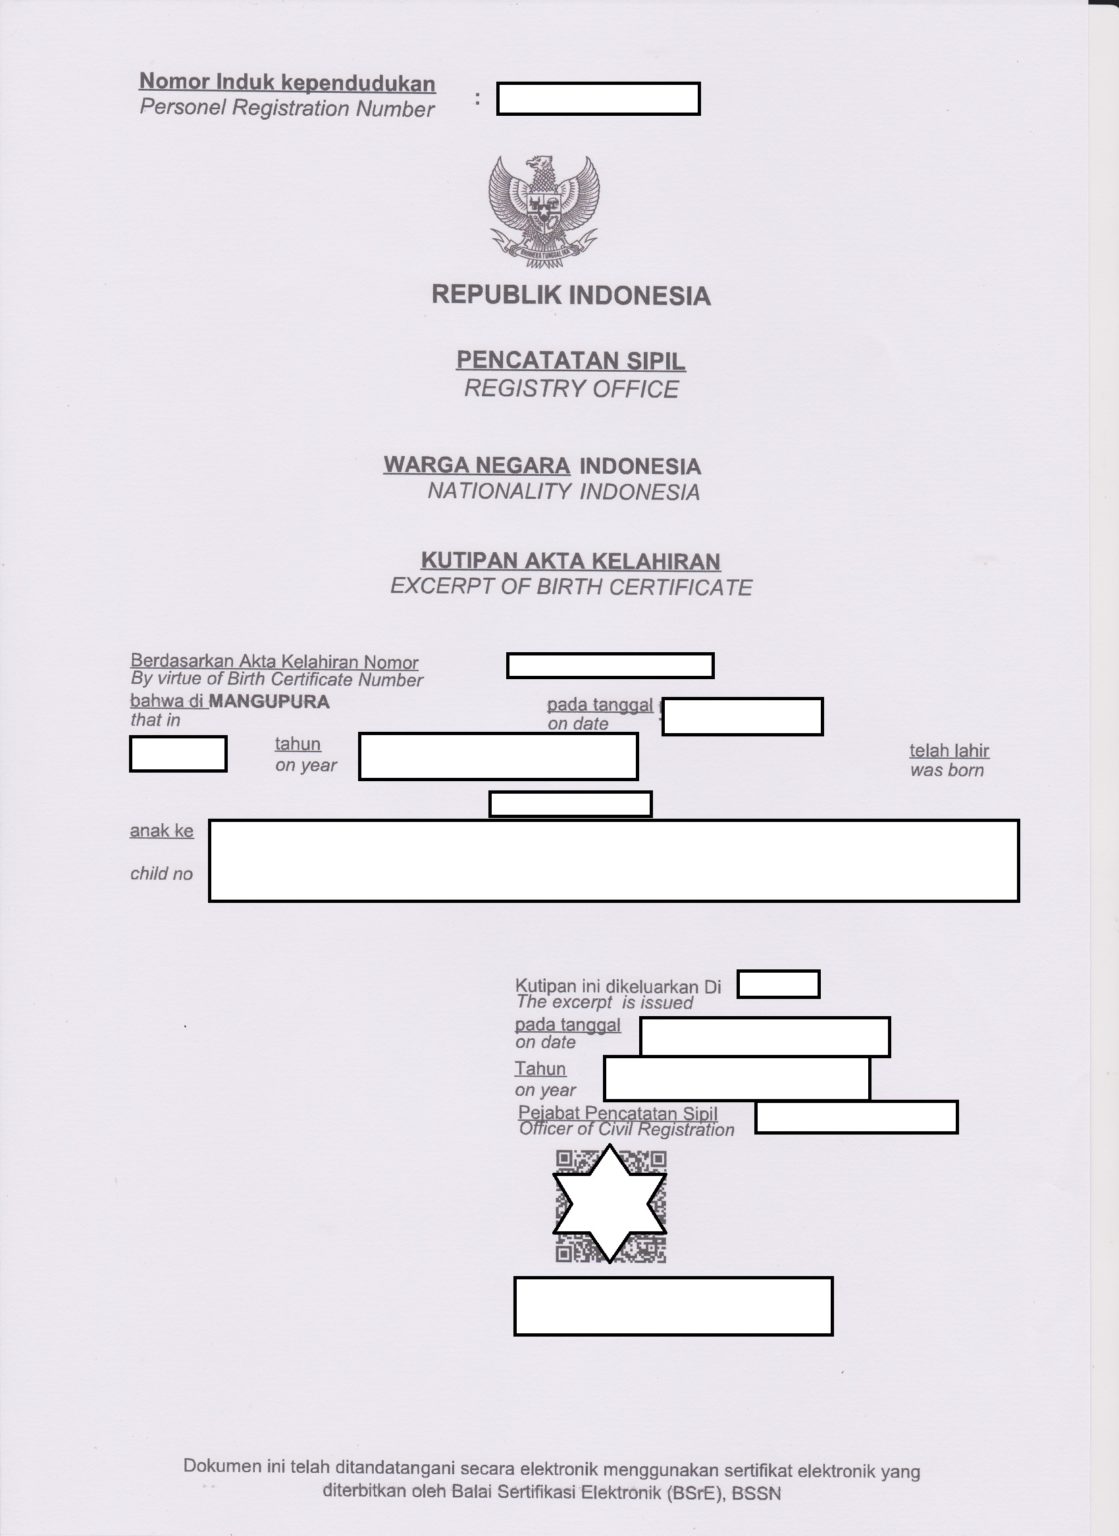 Document service Jasa Eka Bali Indonesia